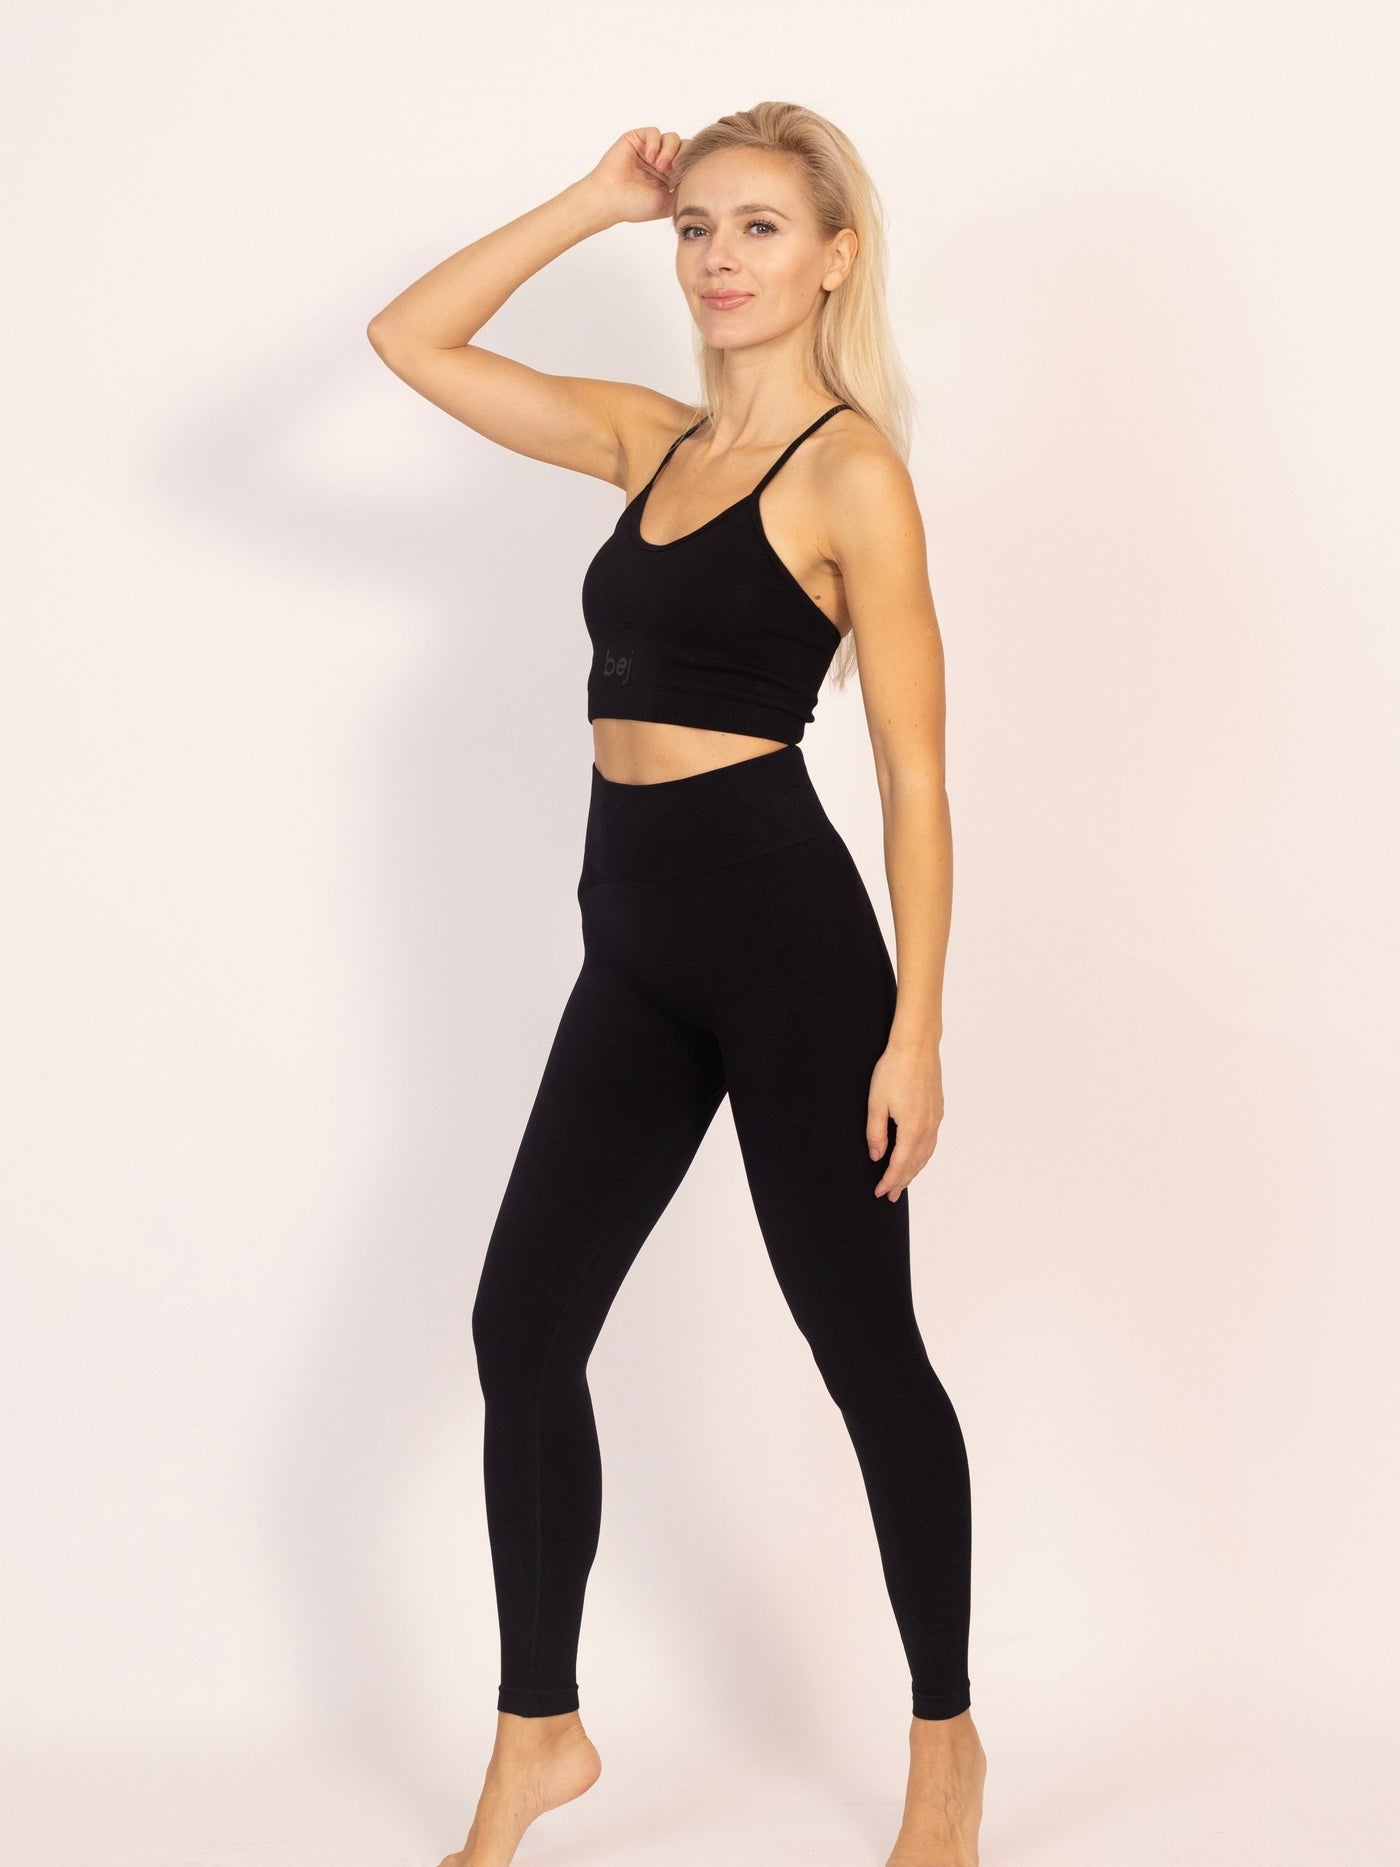 Adventure Seamless Black Legging - Shop women's workout apparel online | Leggings, hoodies, Top & bras | bejactive